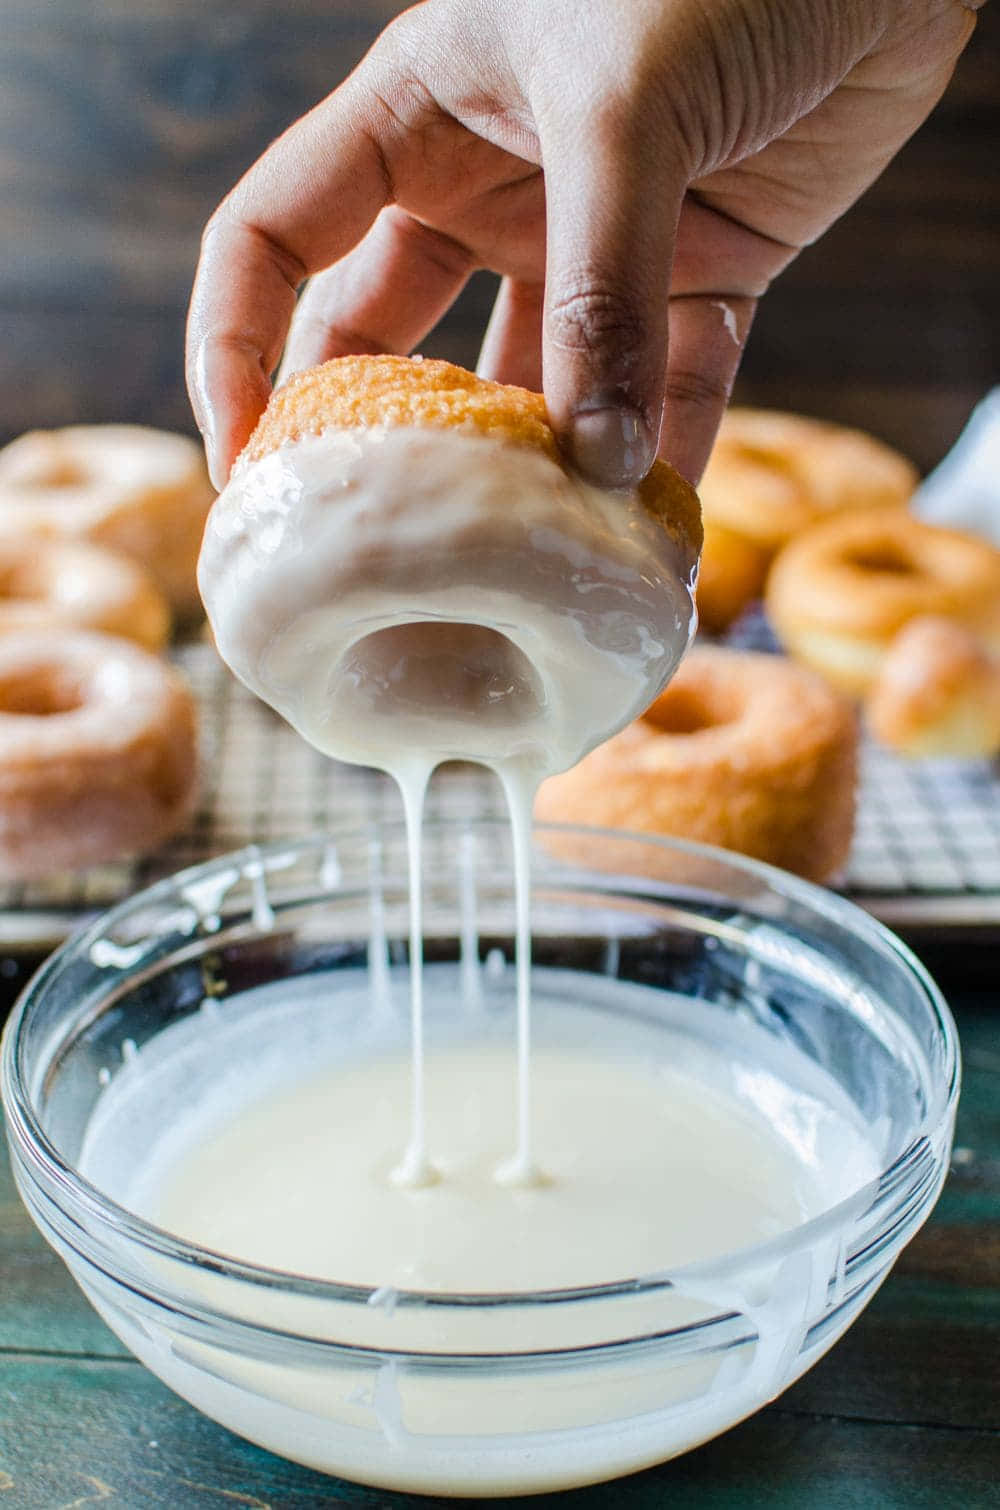 Enjoy a Glazed Donut for a Sweet Treat Wallpaper